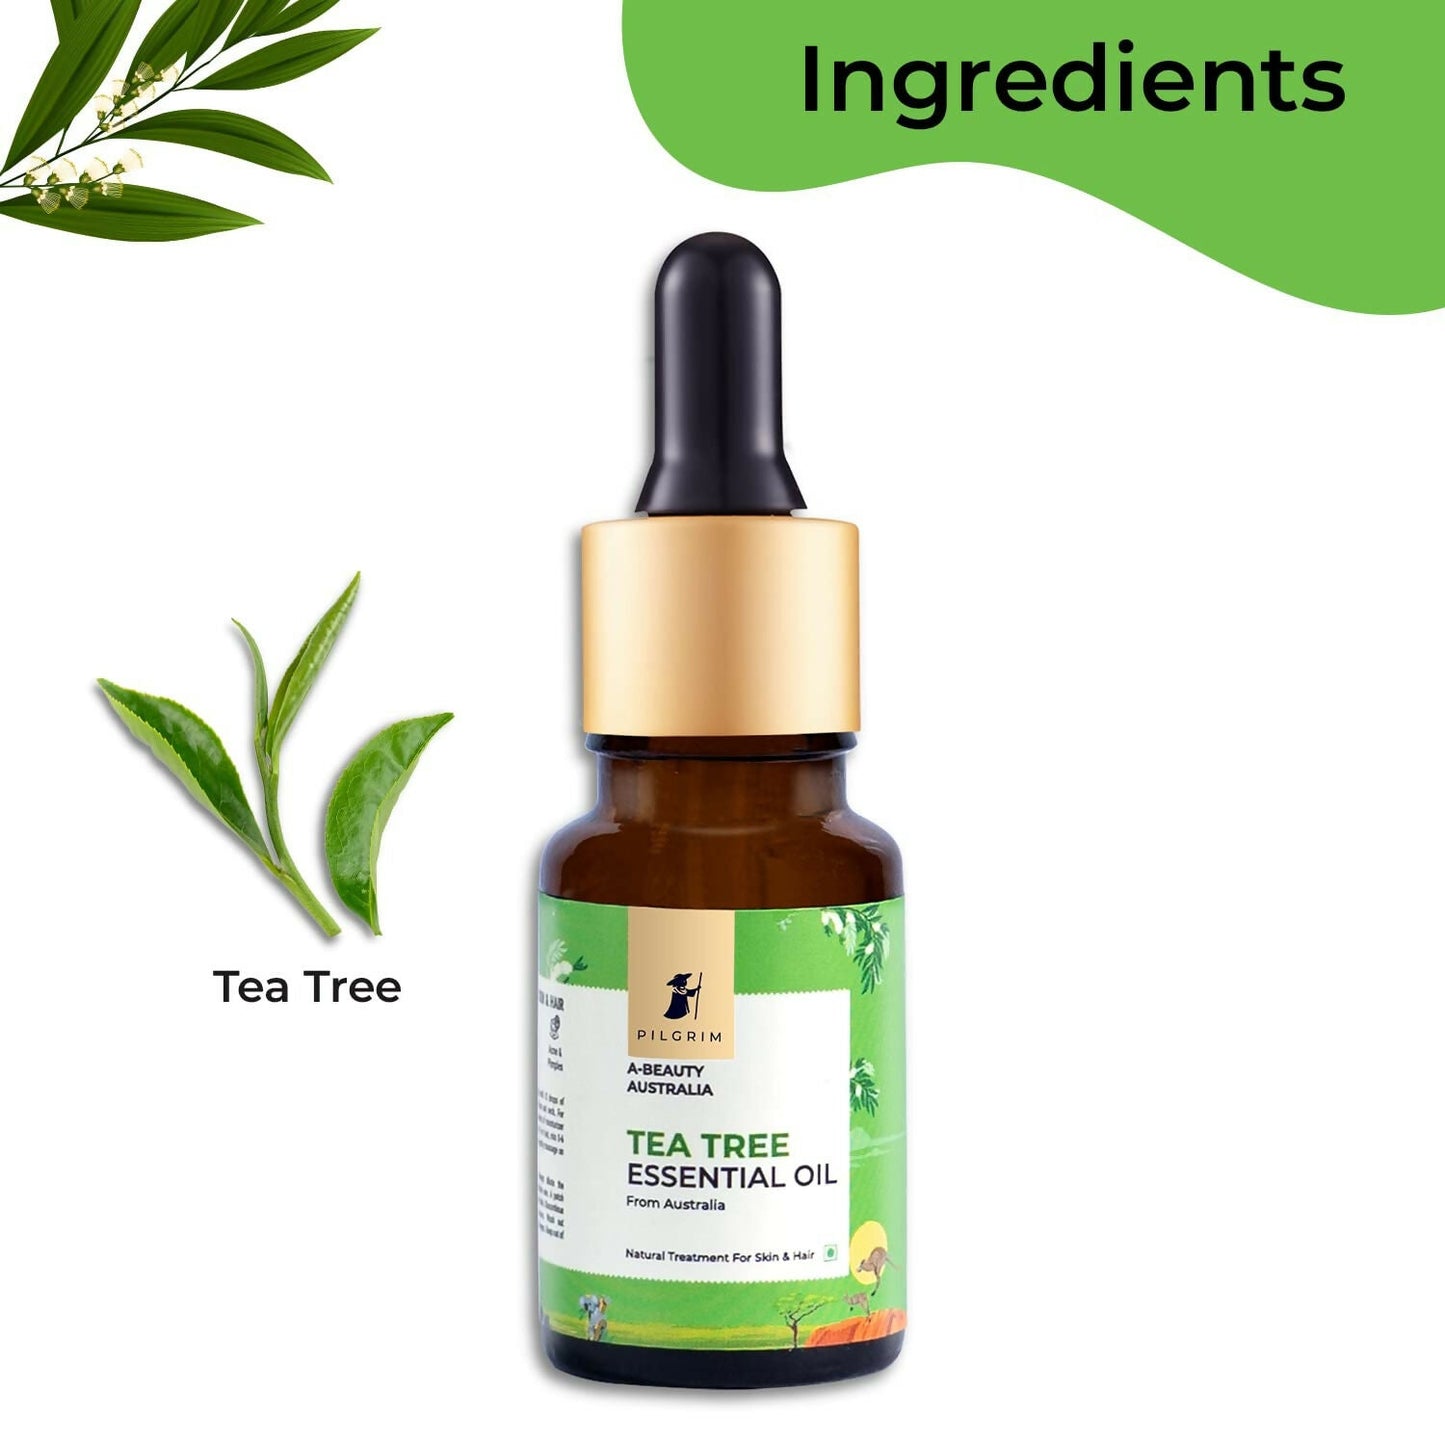 Pilgrim Australian Tea Tree Essential Oil For Hair, Skin Care, Acne & Pimples